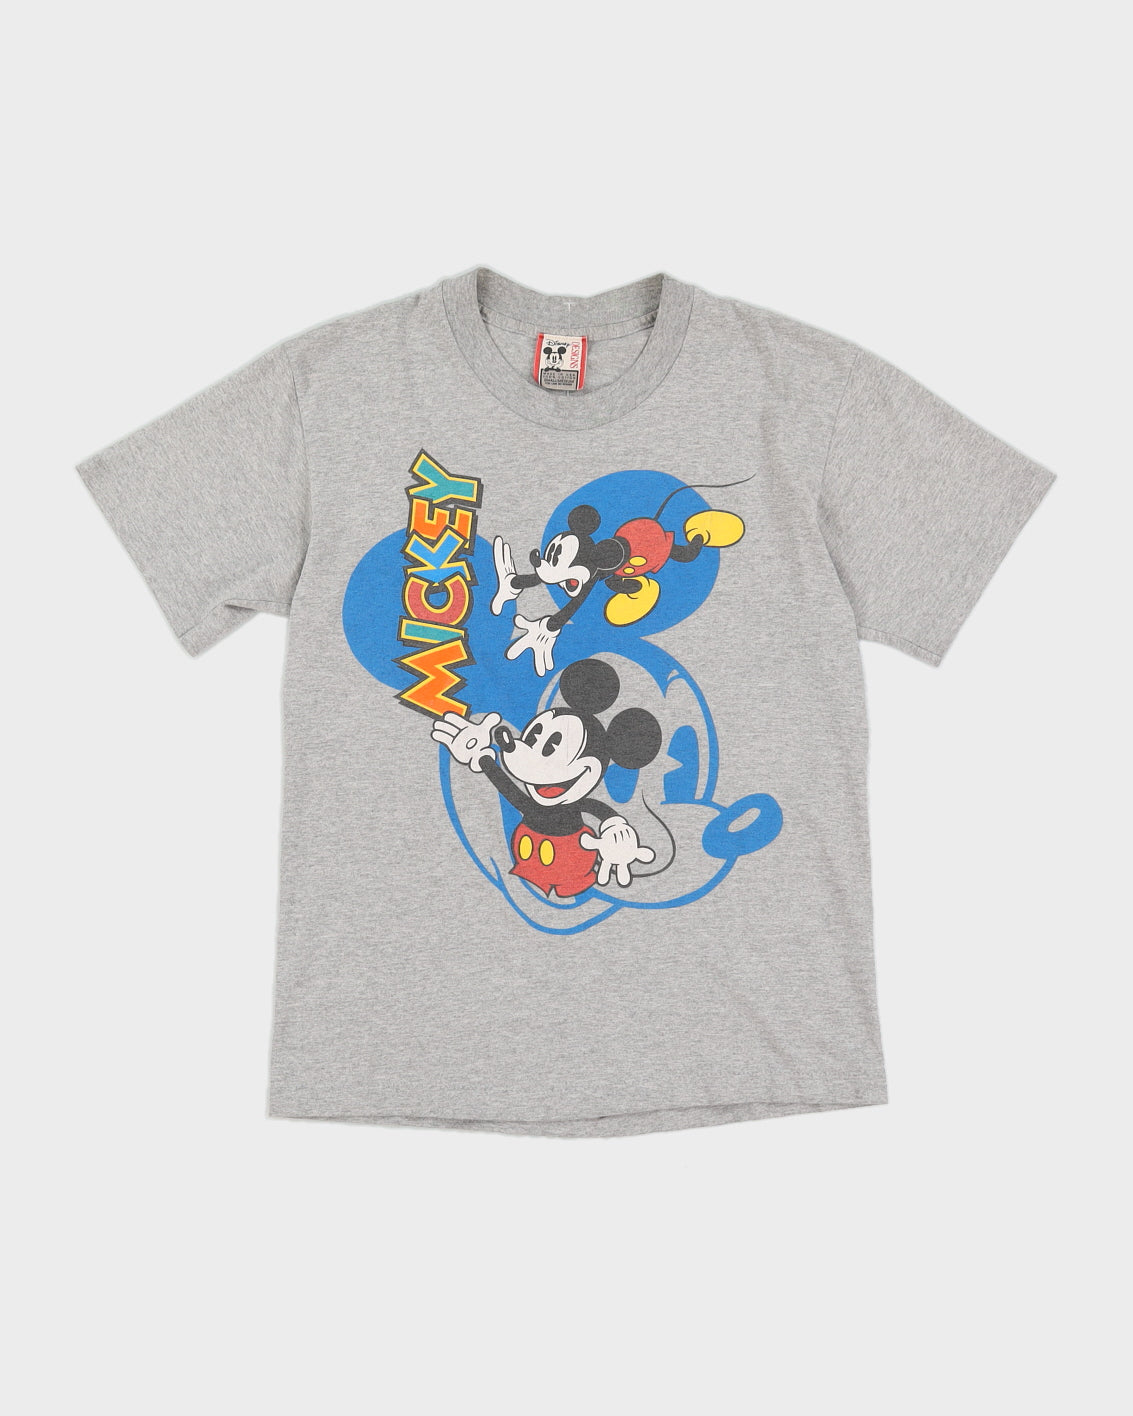 Vintage 90s Disney Designs Mickey Mouse T-Shirt - S/M